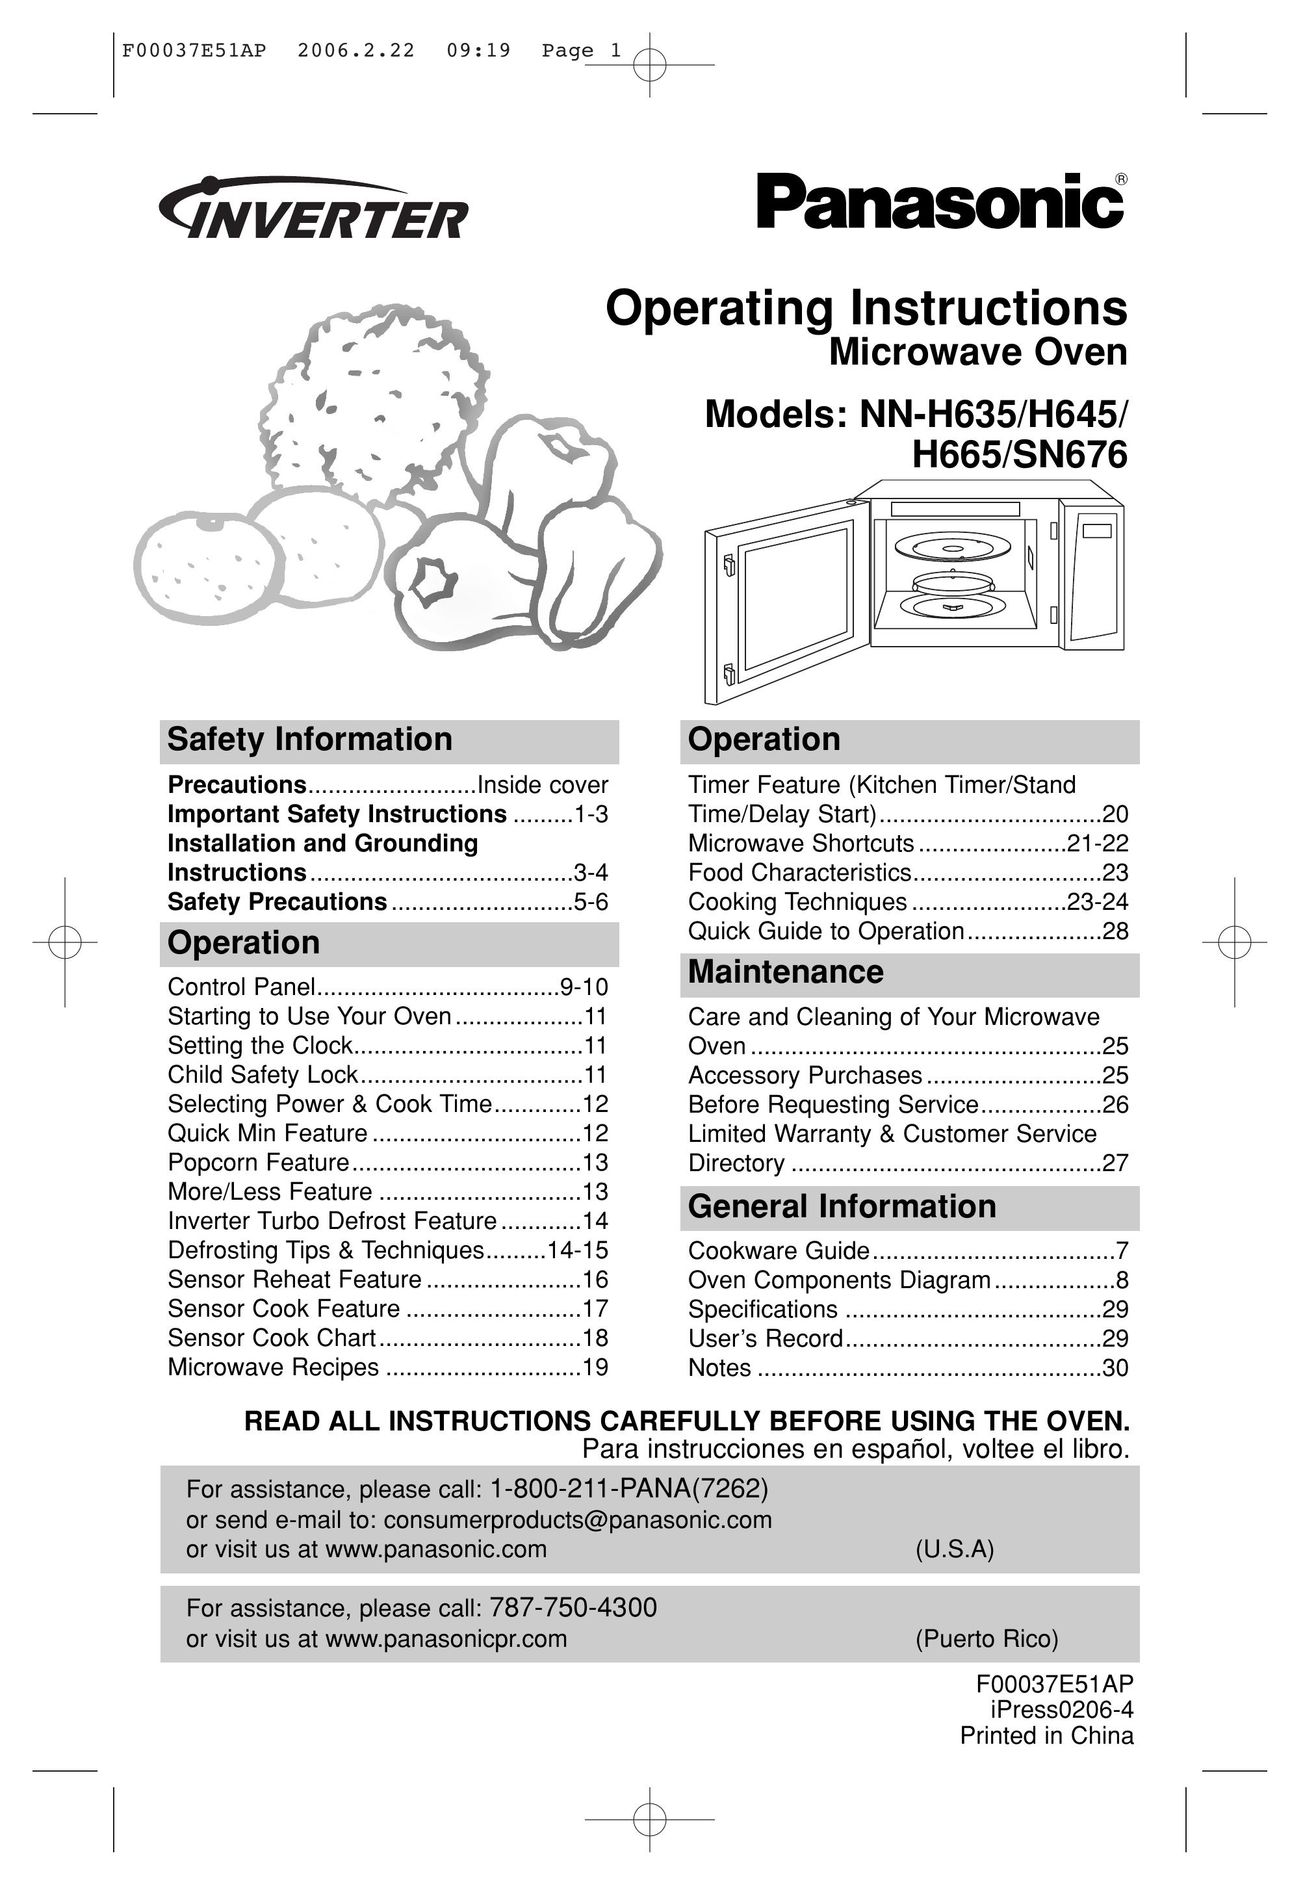 Sirius Satellite Radio SN676 Microwave Oven User Manual